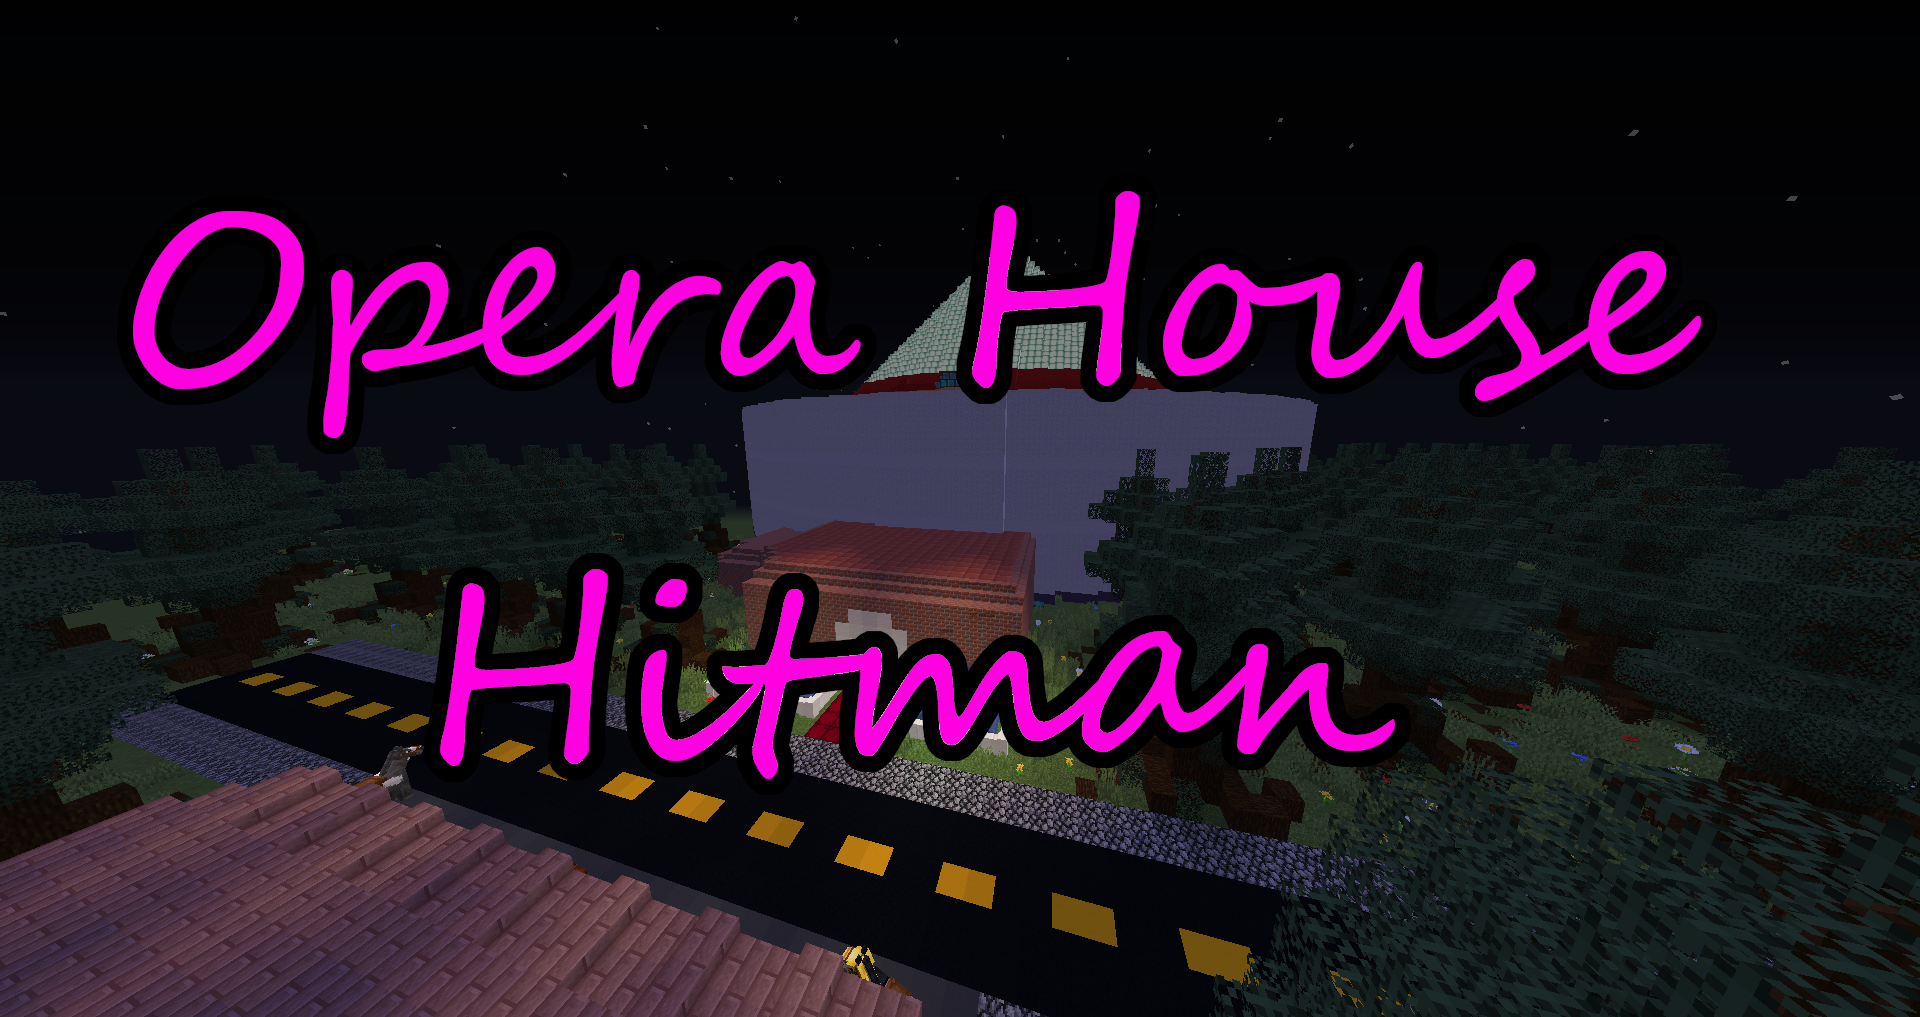 Tải về Opera House Hitman cho Minecraft 1.16.3